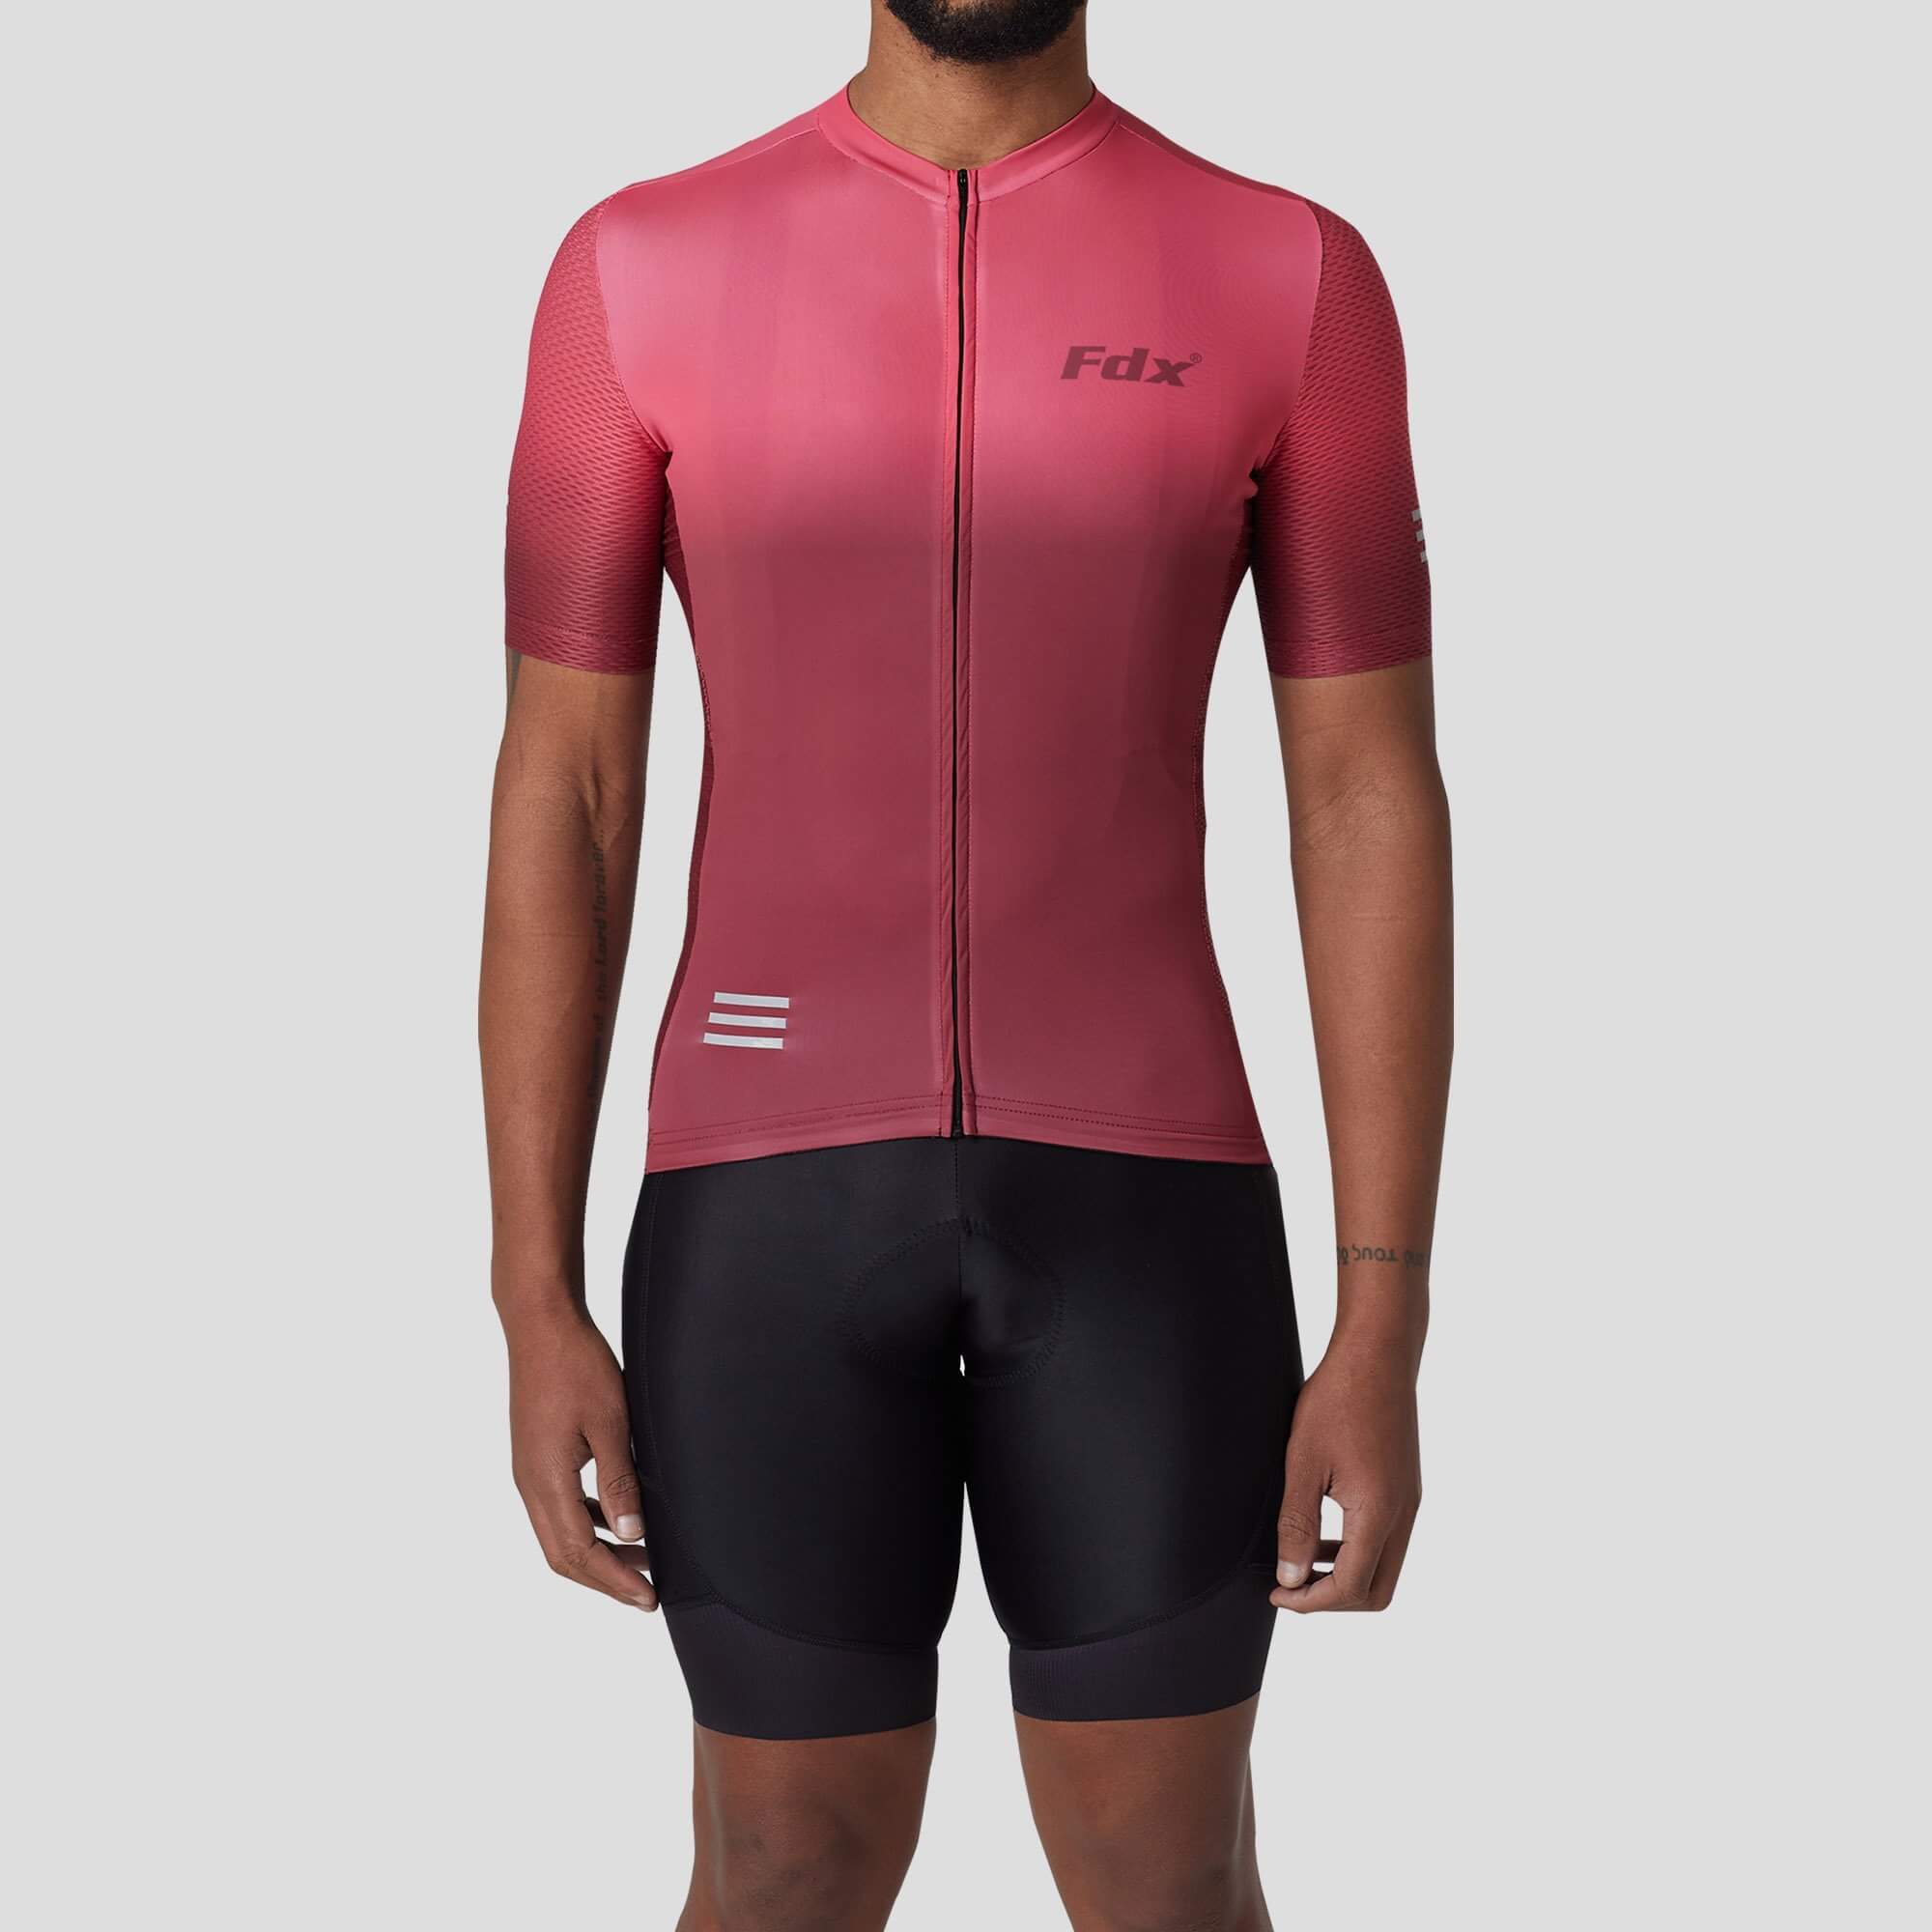 Fdx Mens Pink & Maroon Half Sleeve Summer Cycling Jersey Breathable lightweight Fabric, Bib Short Hi Viz Reflectors & Full Zipper Cycling Gear Australia